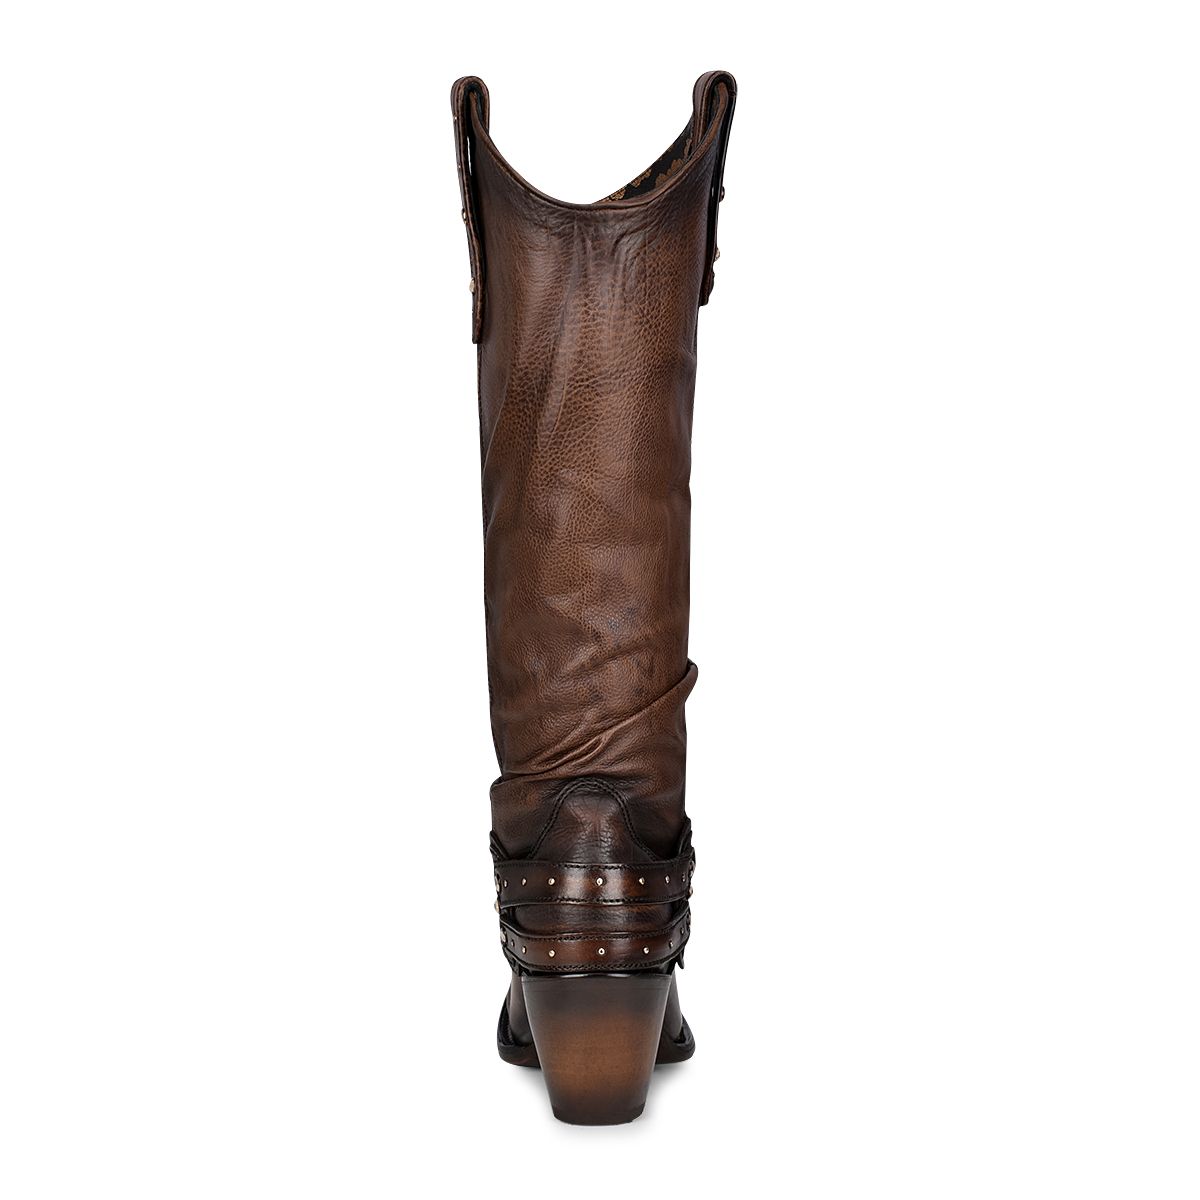 1Z41RS - Cuadra mocha casual fashion cowboy leather boots for women-CUADRA-Kuet-Cuadra-Boots